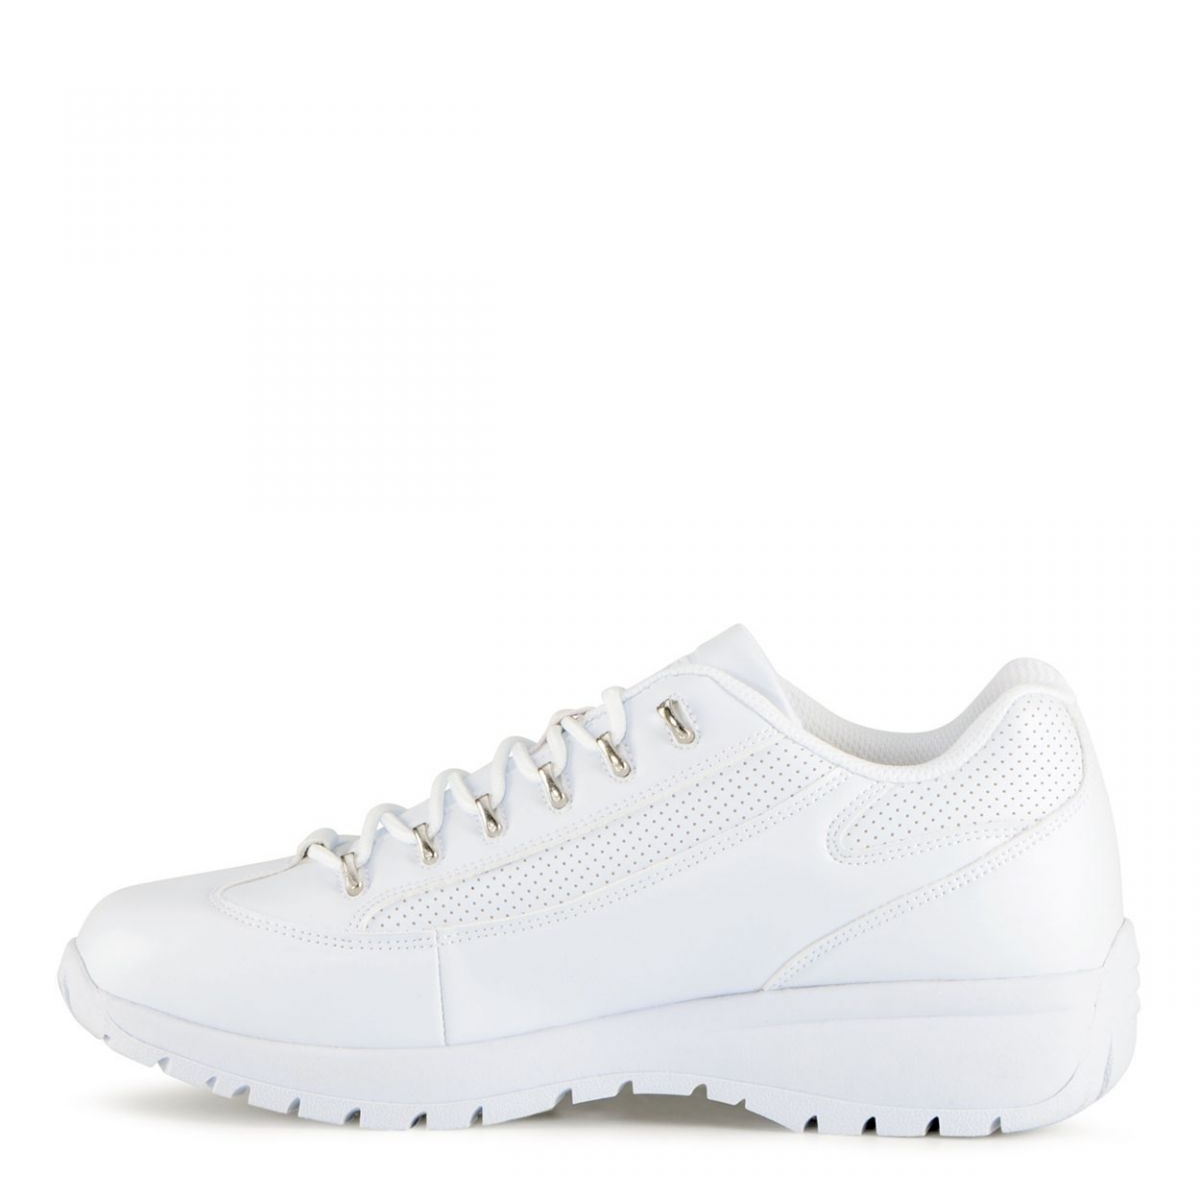 Lugz Men's Express Sneaker White - MEXPRSPV-100 WHITE - WHITE, 8